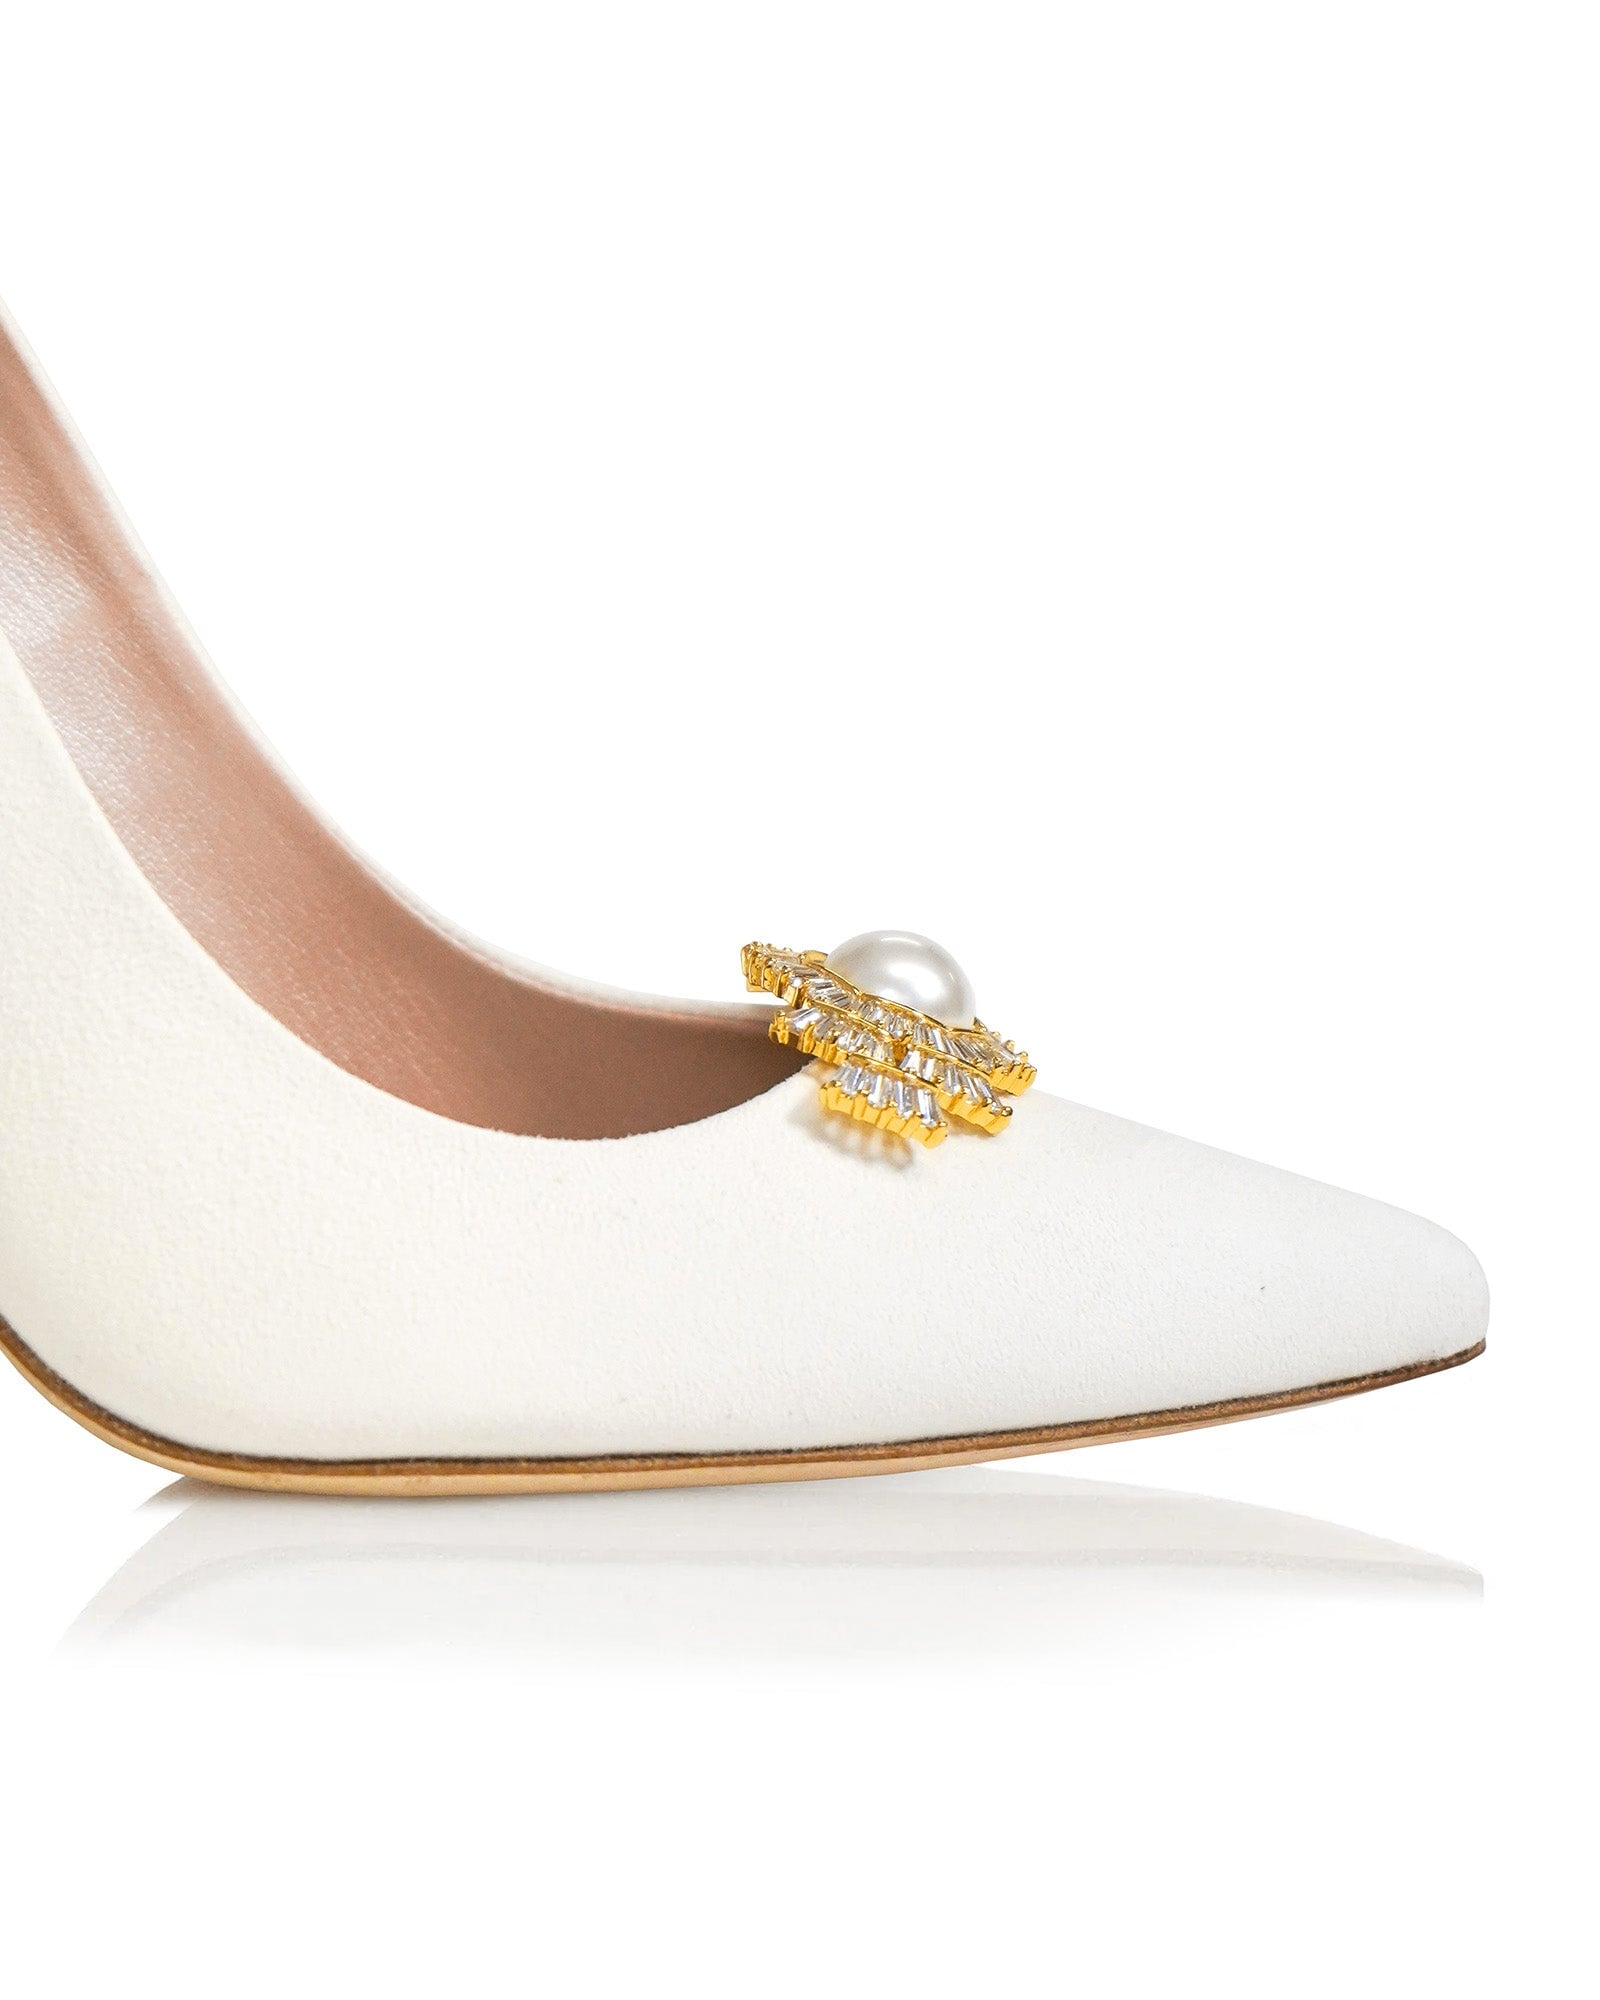 Duchess Pearl Shoe Clips Shoe Clip Emmy London  image